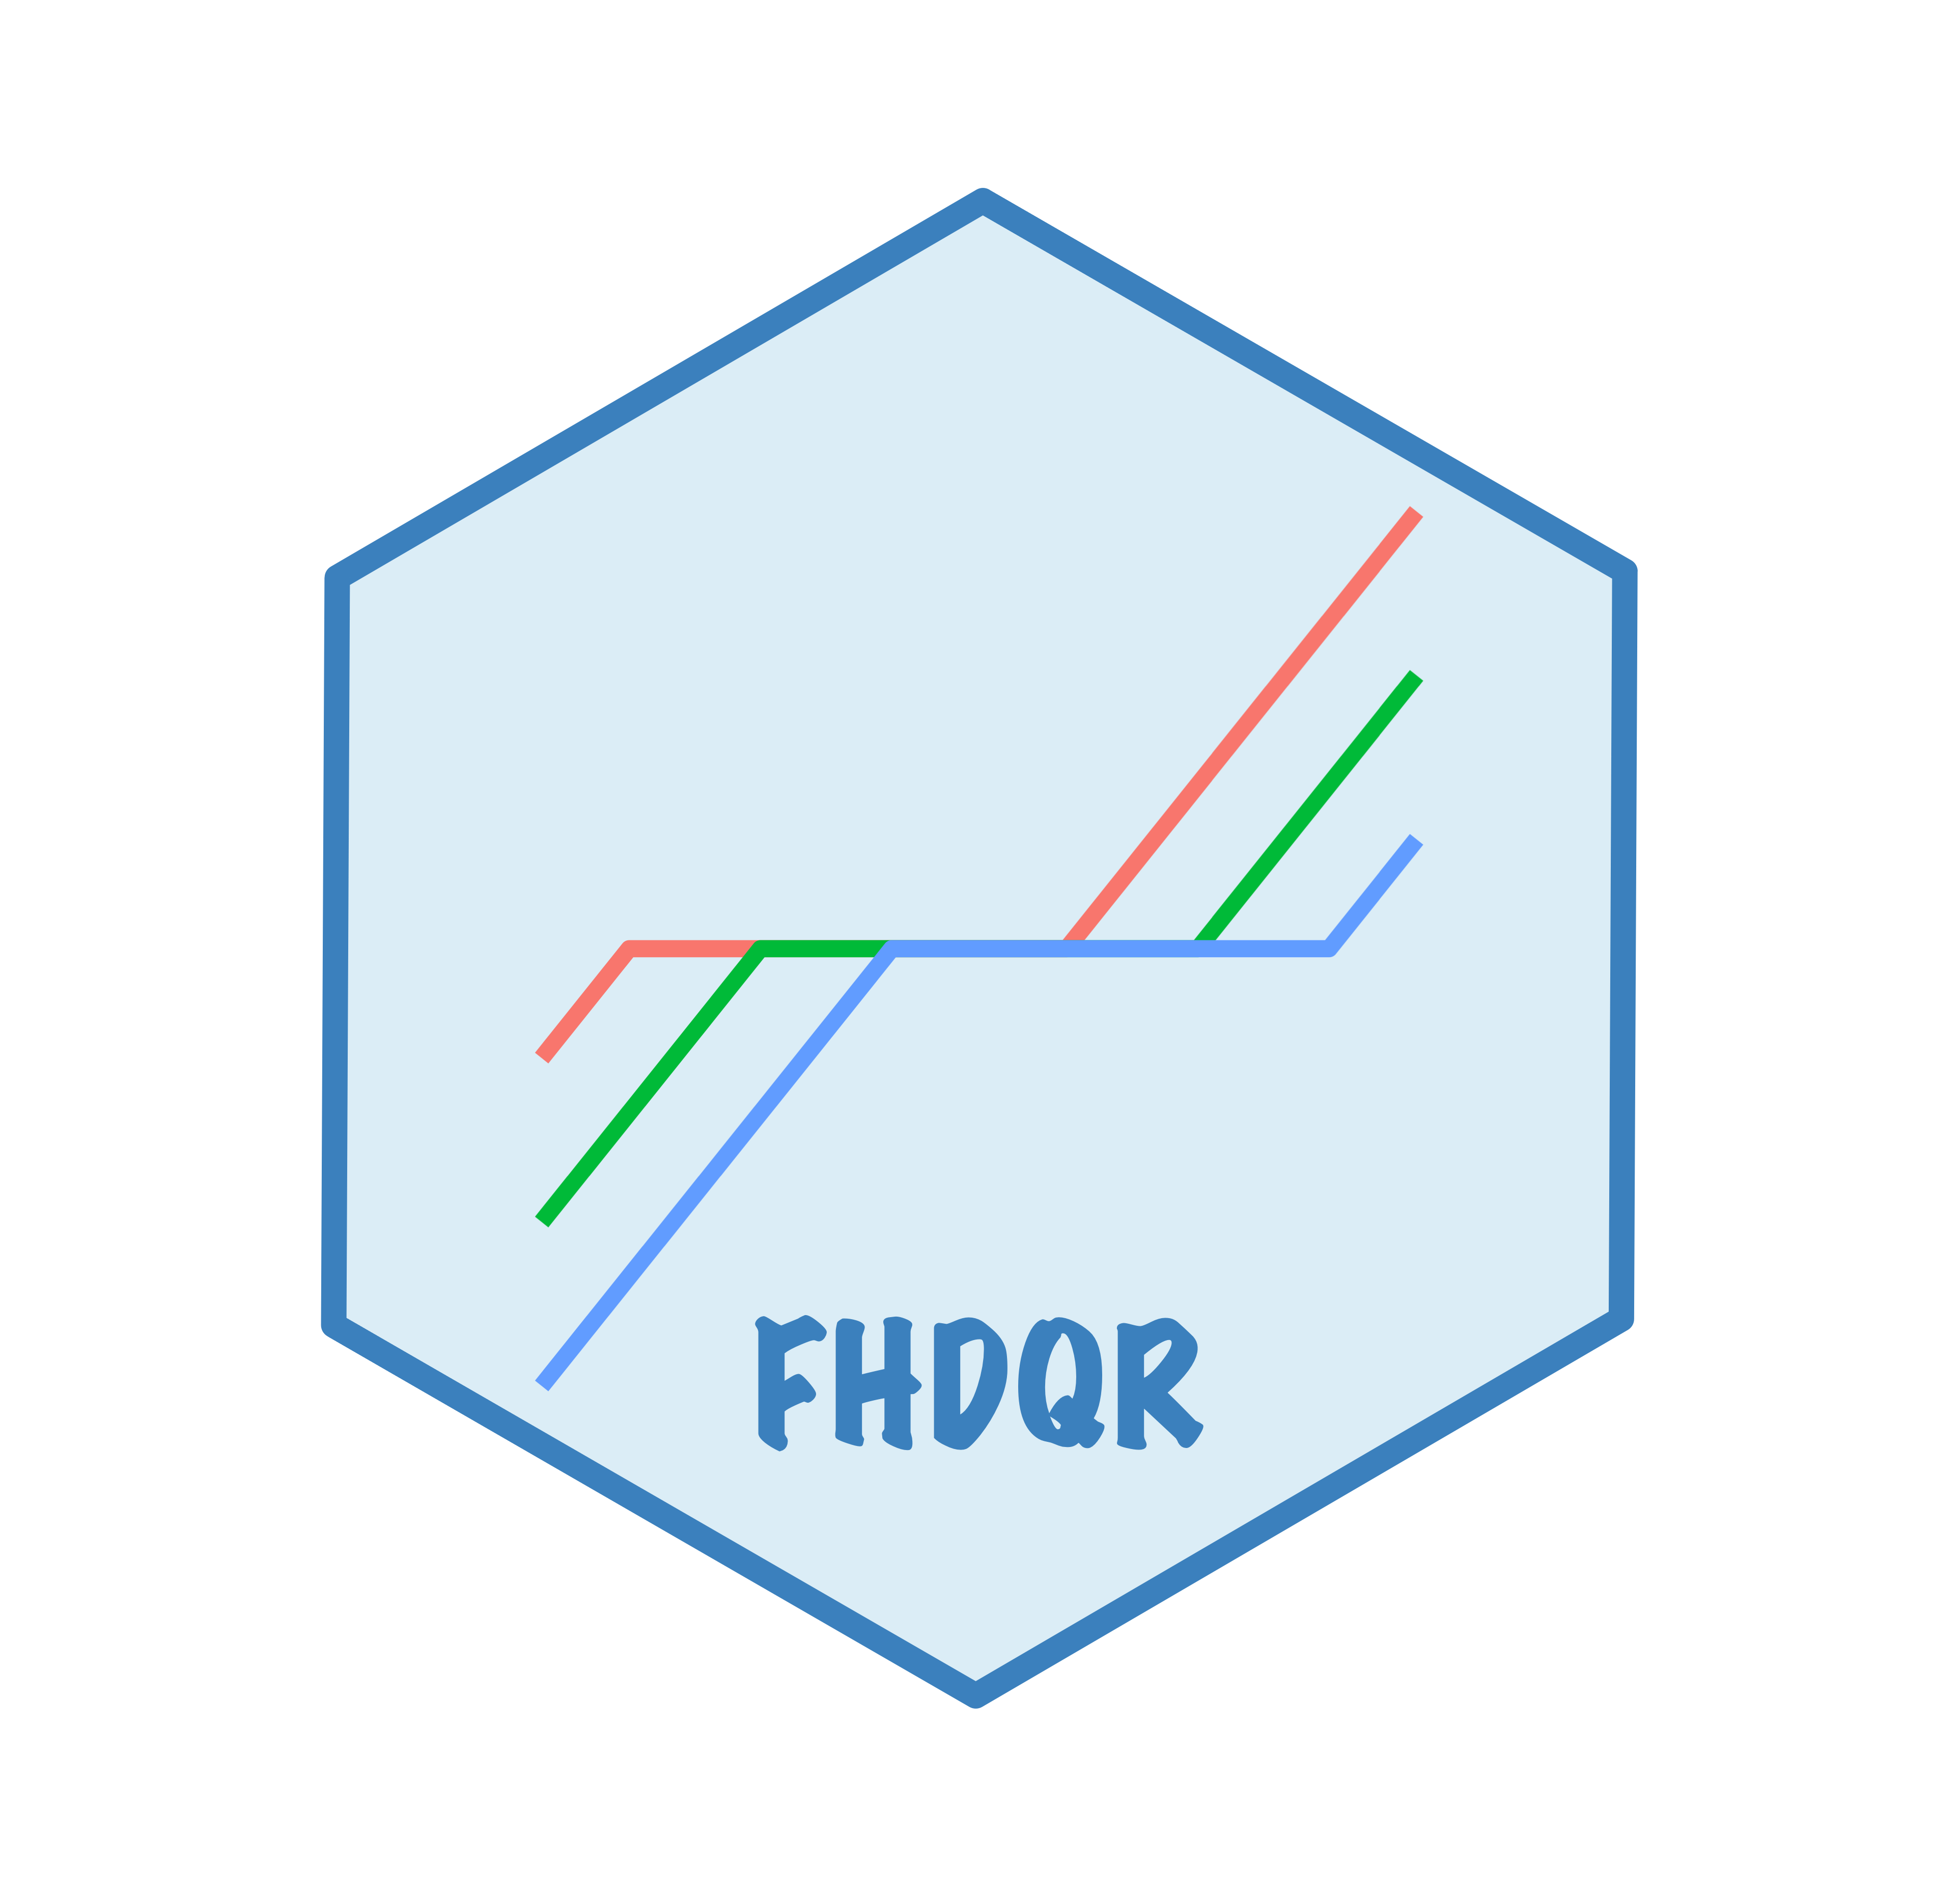 FHDQR hex sticker